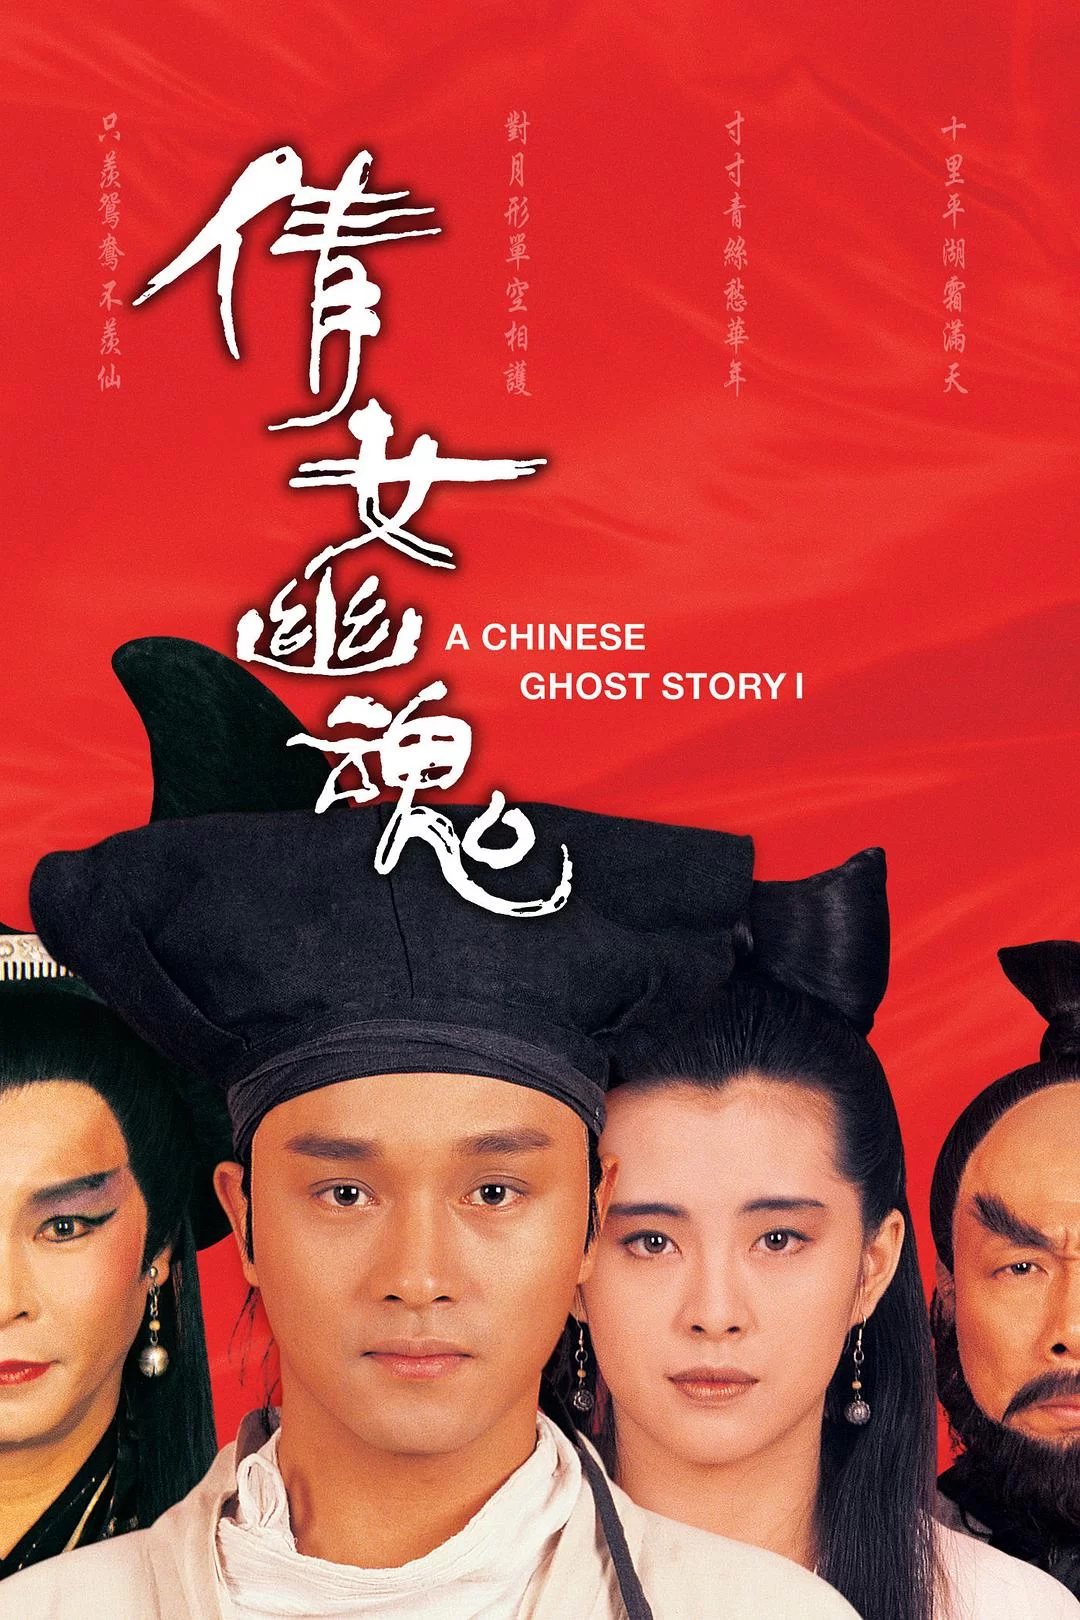 倩女幽魂(87版) /1987 A Chinese Ghost Story 23.46GB